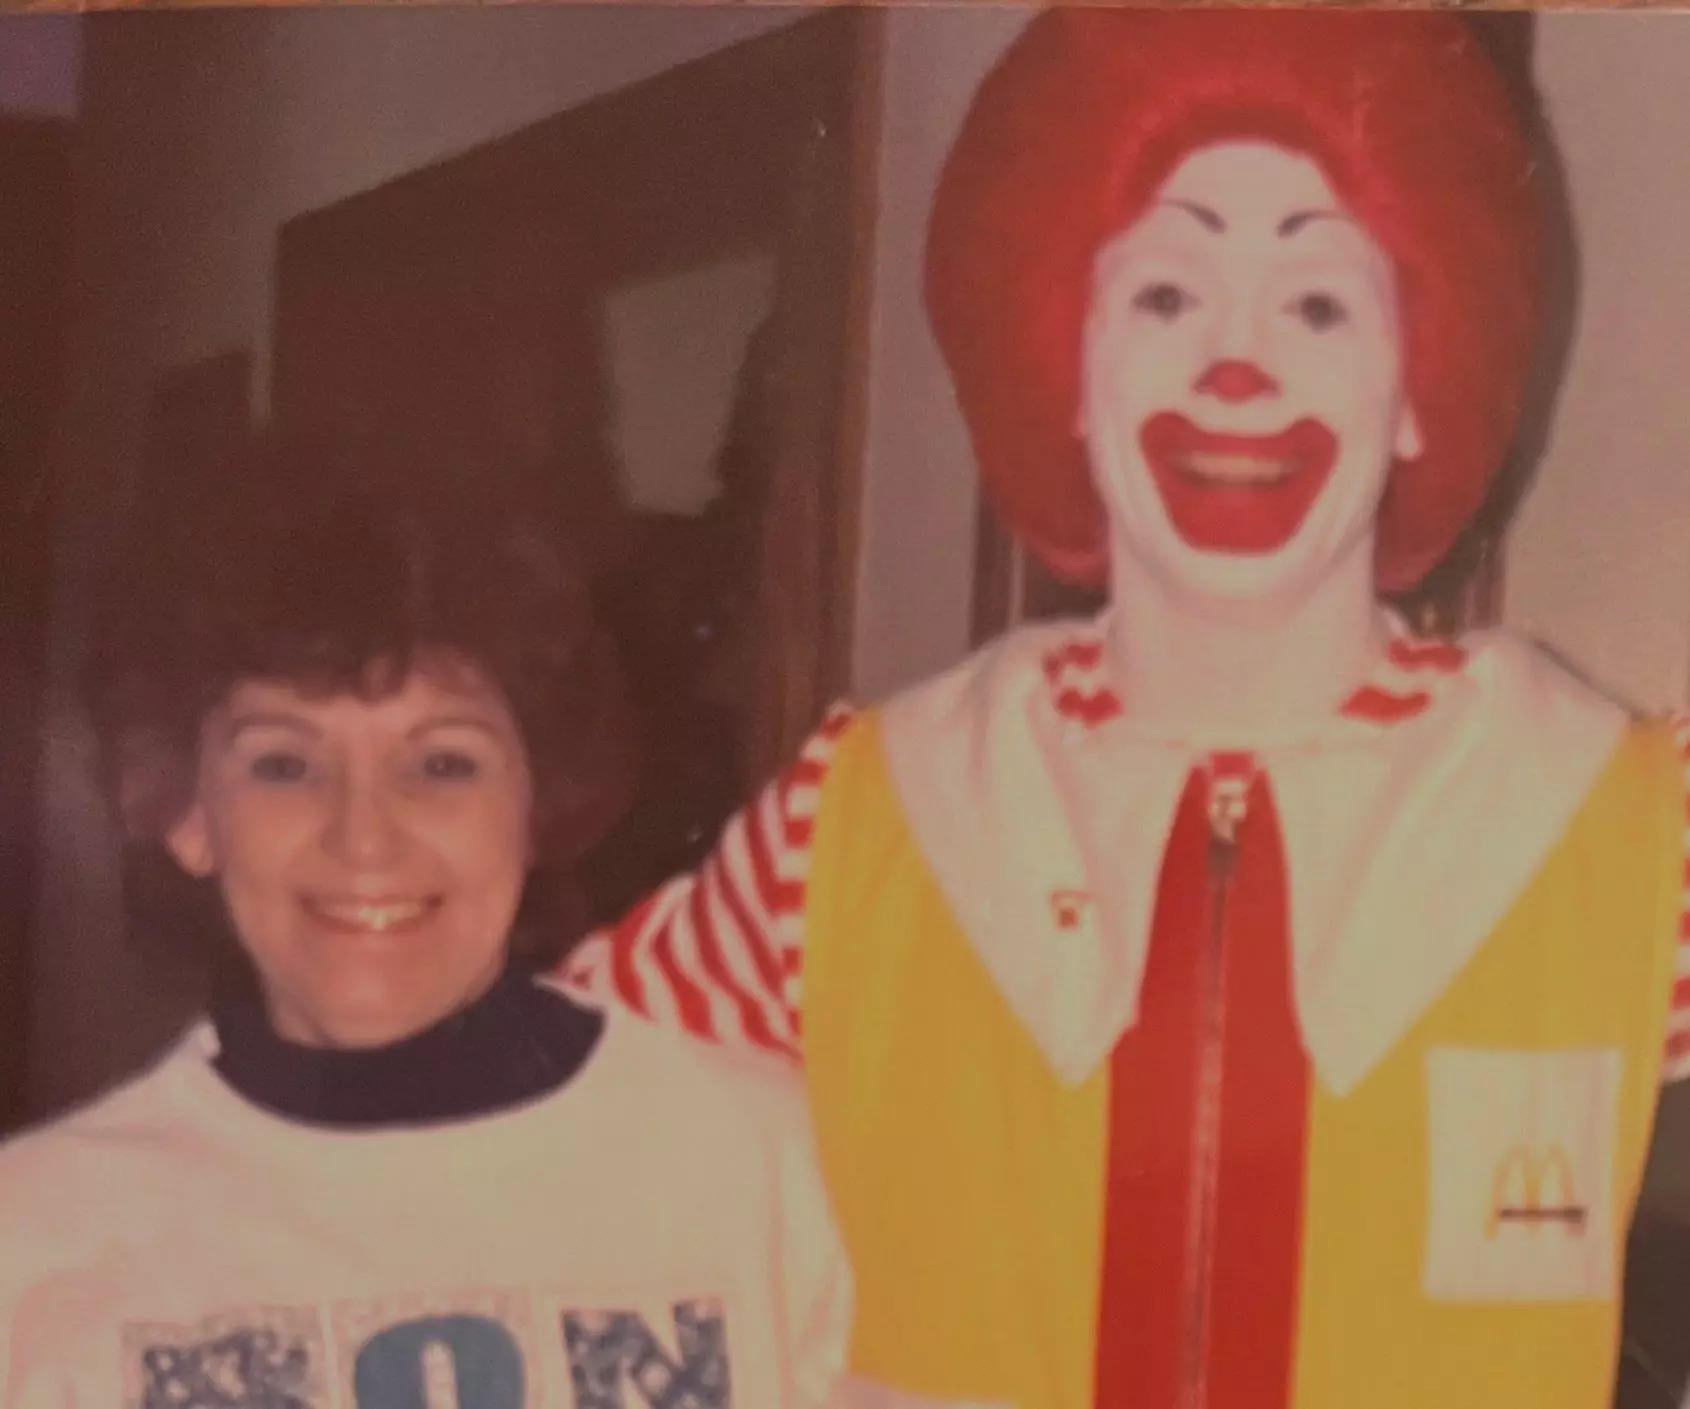 An old photo showing Dot Sharp, a McDonald